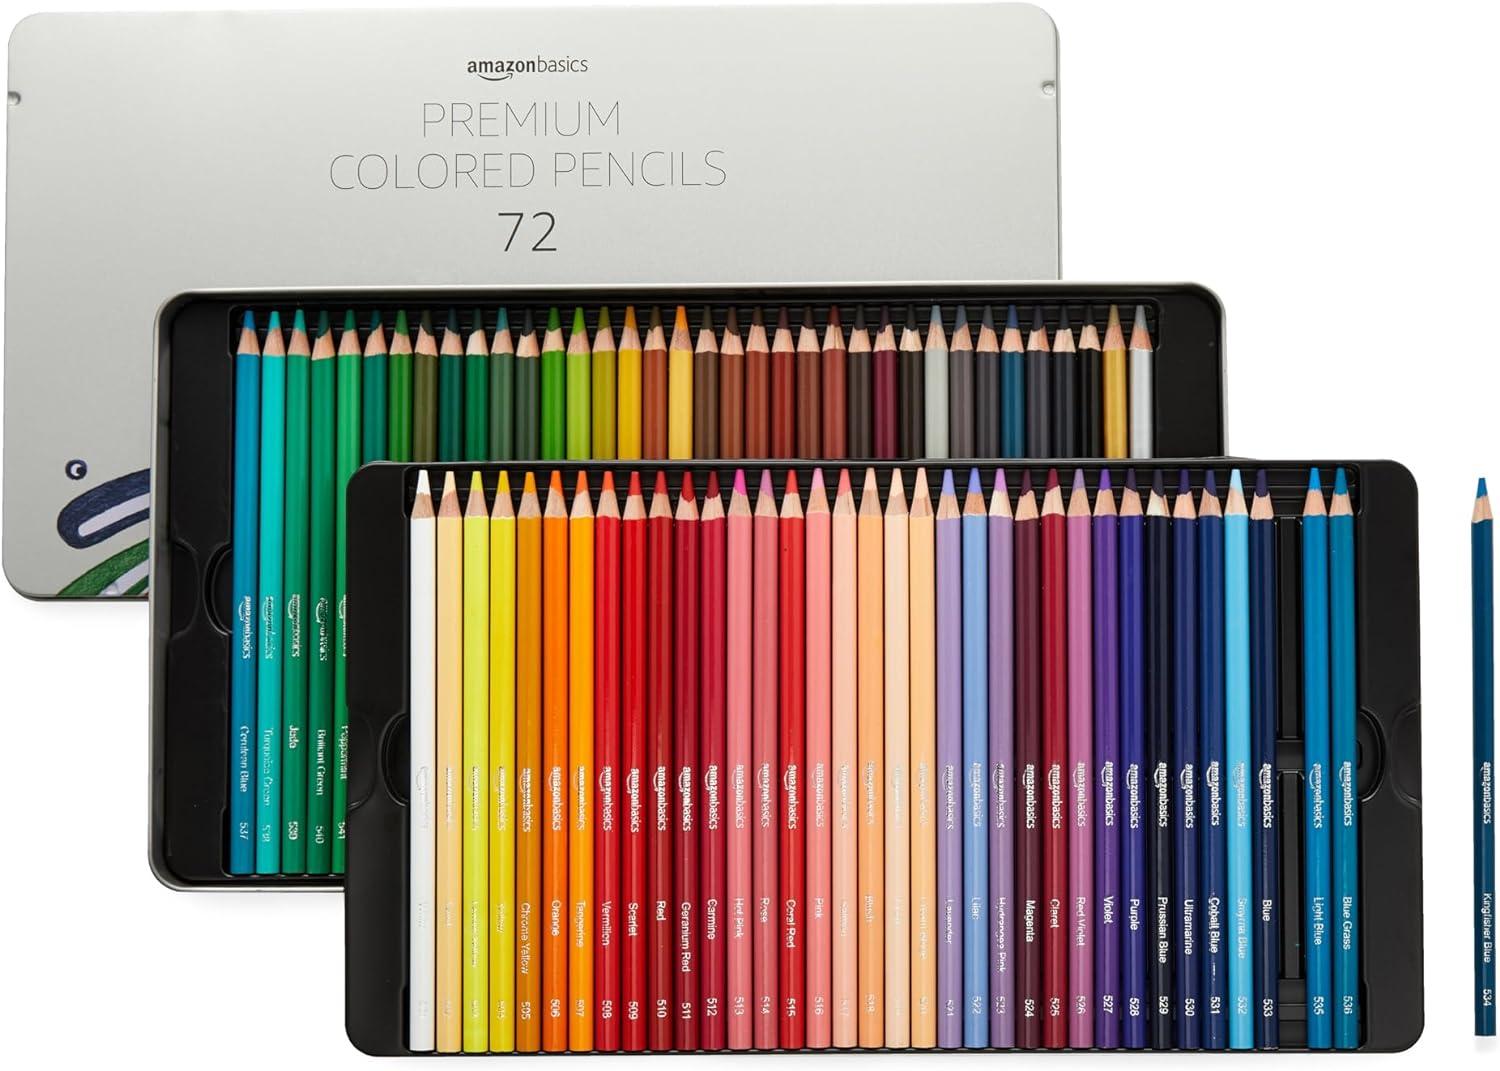 Amazon Basics Premium Colored Pencils 72 Count Set for $10.70